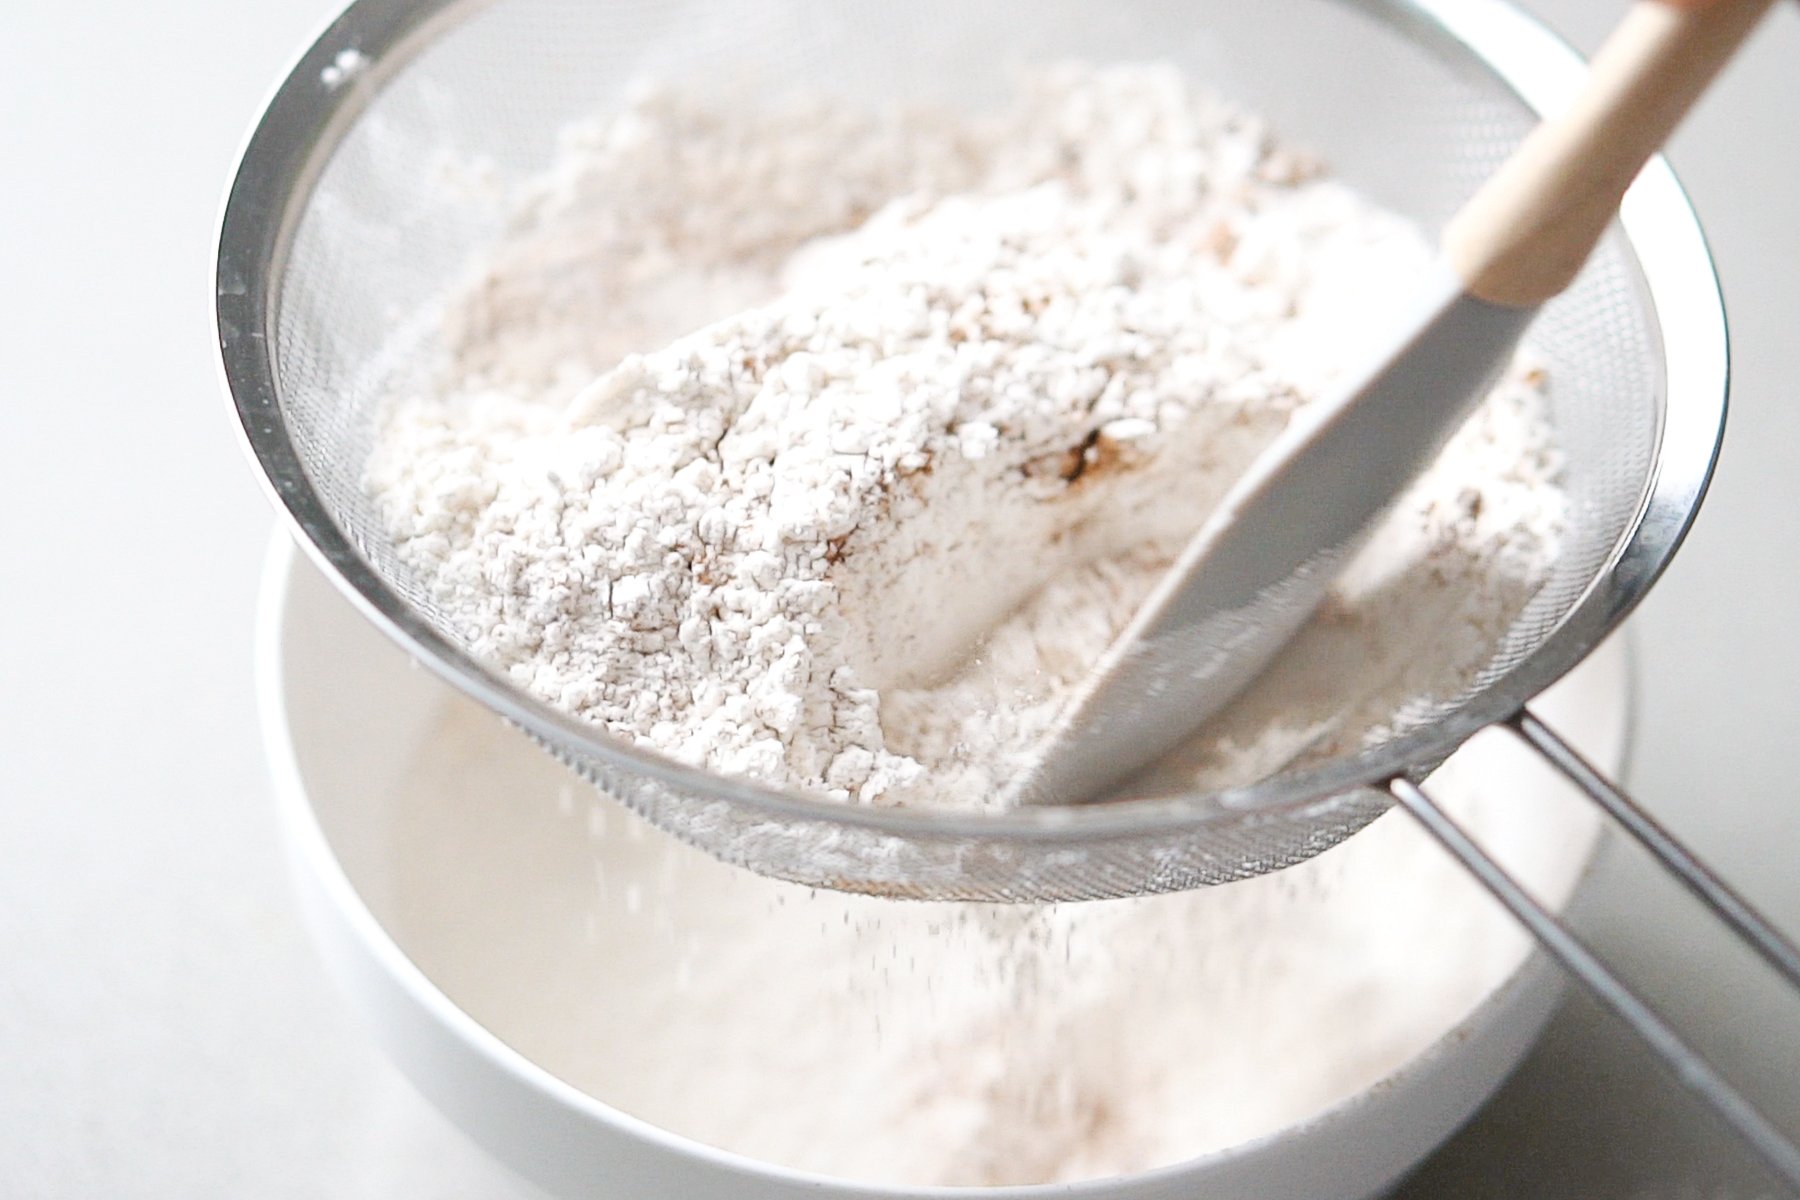 Sifting flour, baking soda, salt and cinammon